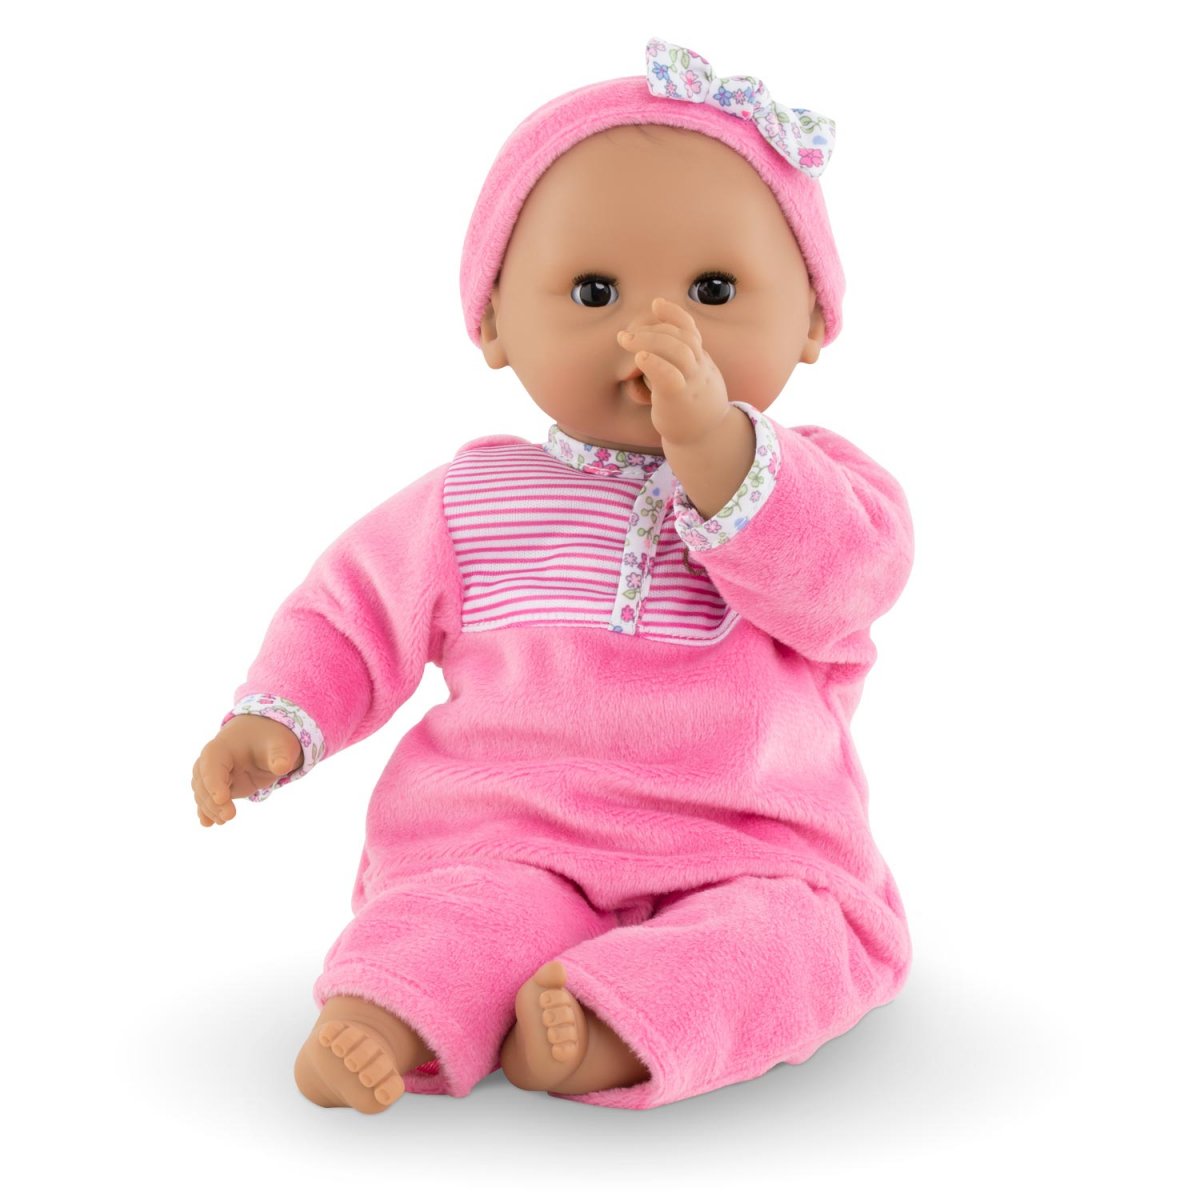 Corolle Mon Premier Poupon Bebe Calin, Myrtille, 12 Toy Baby Doll, Pink